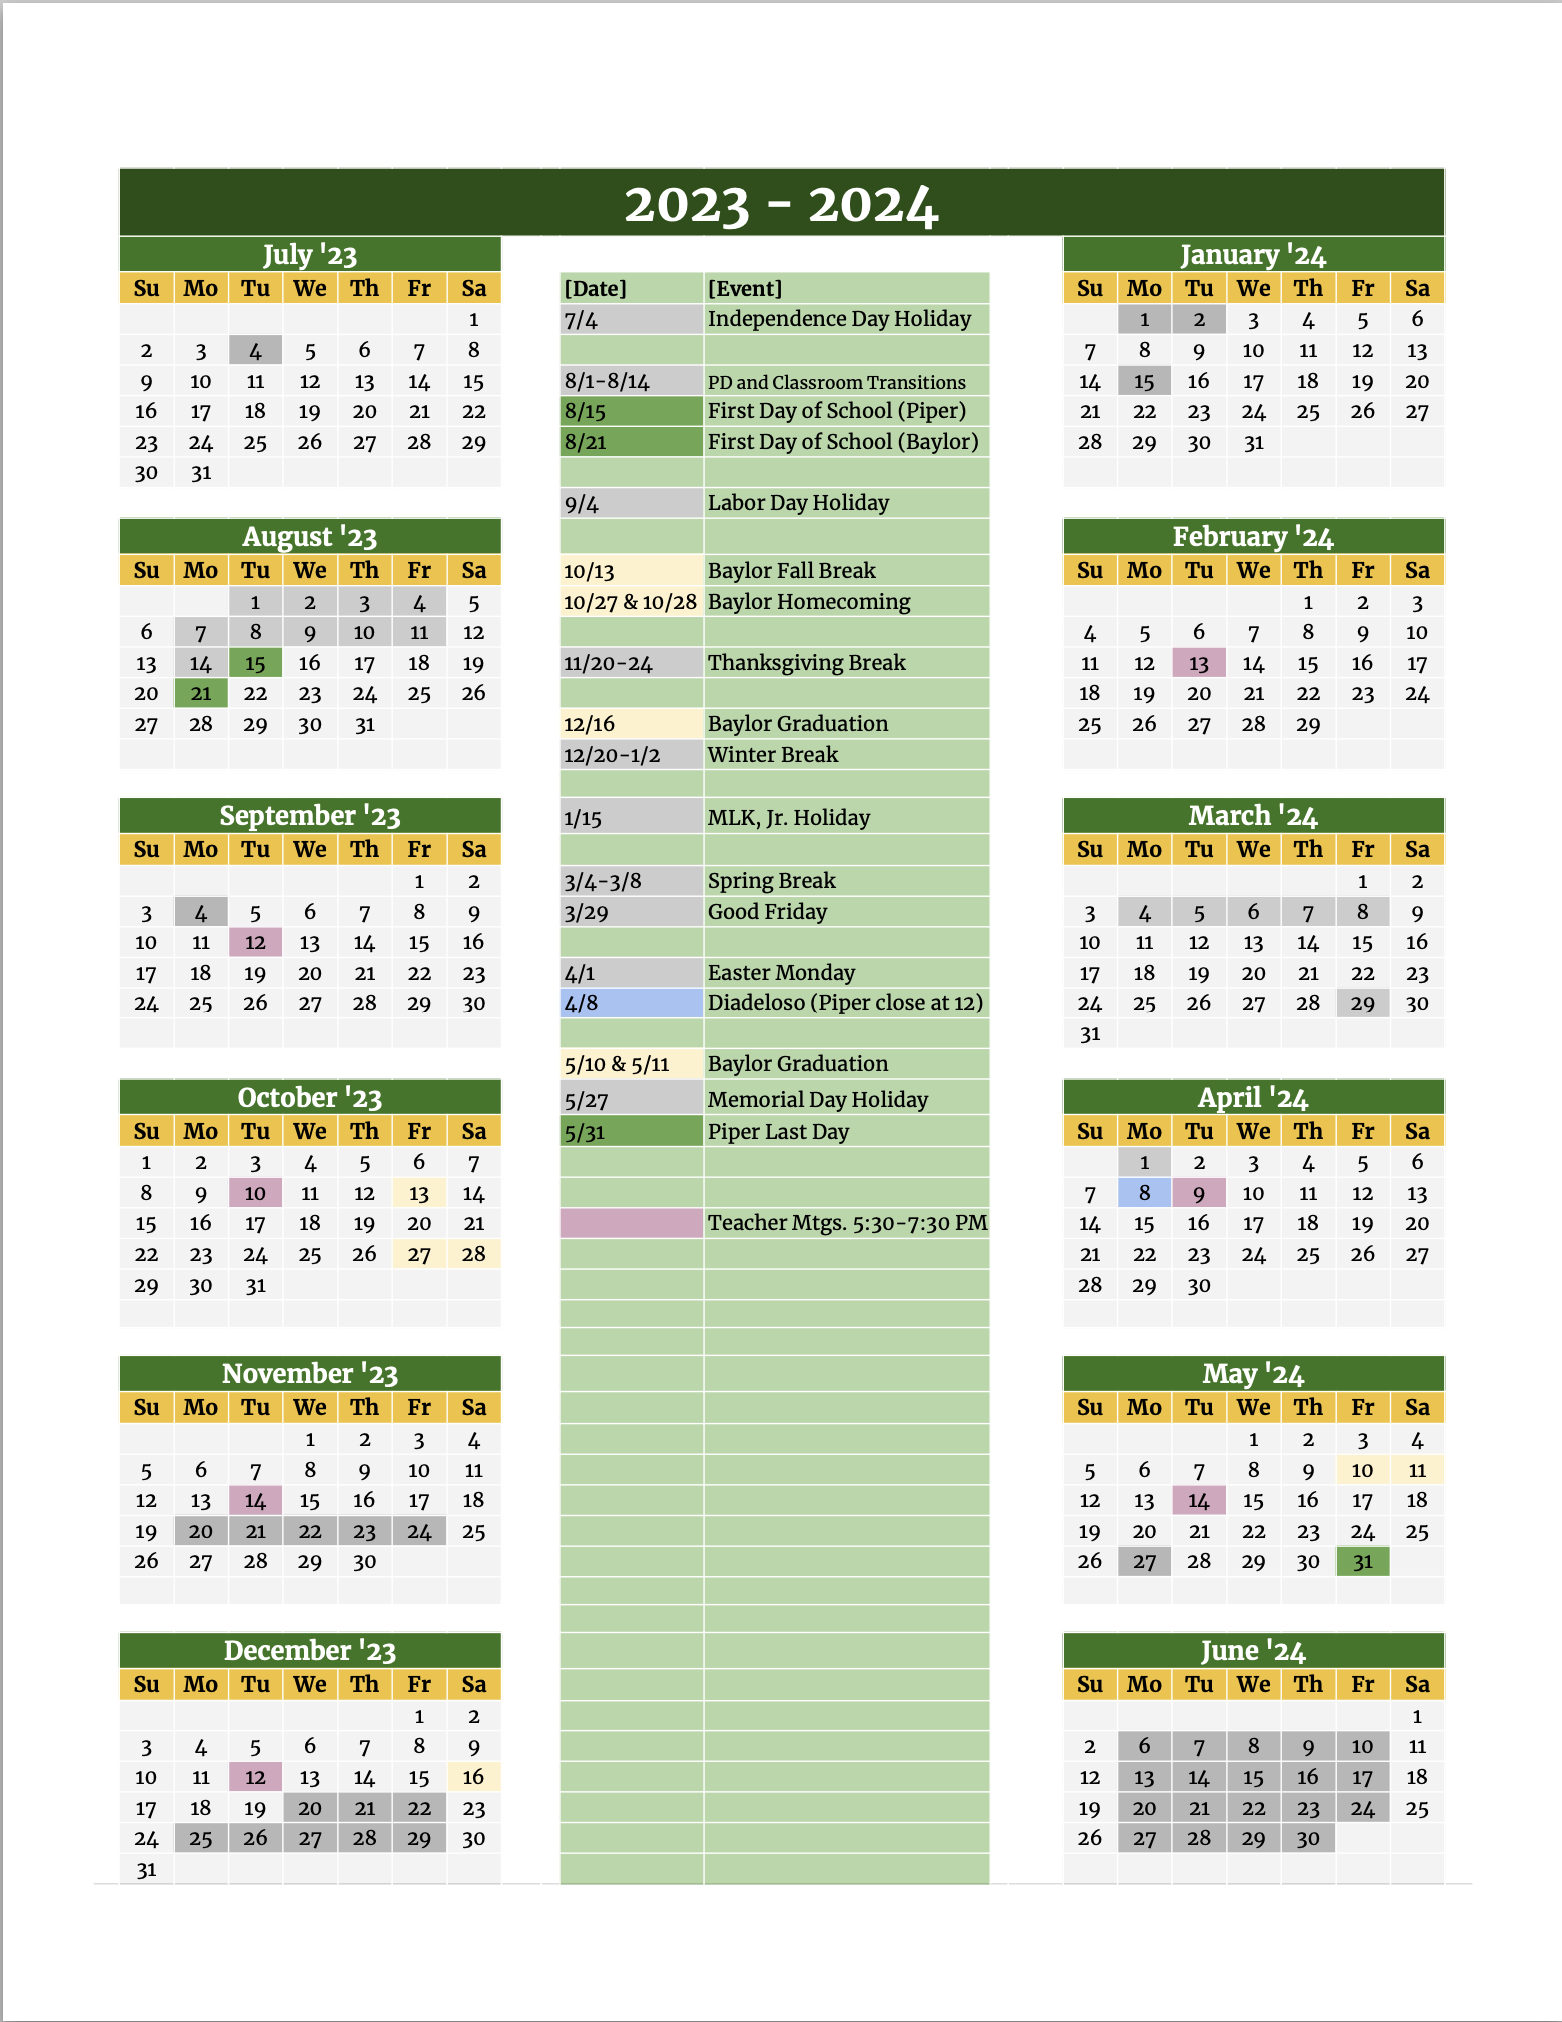 2024 Summer Calendar Schedule Of Events Images Dec 2024 Calendar With